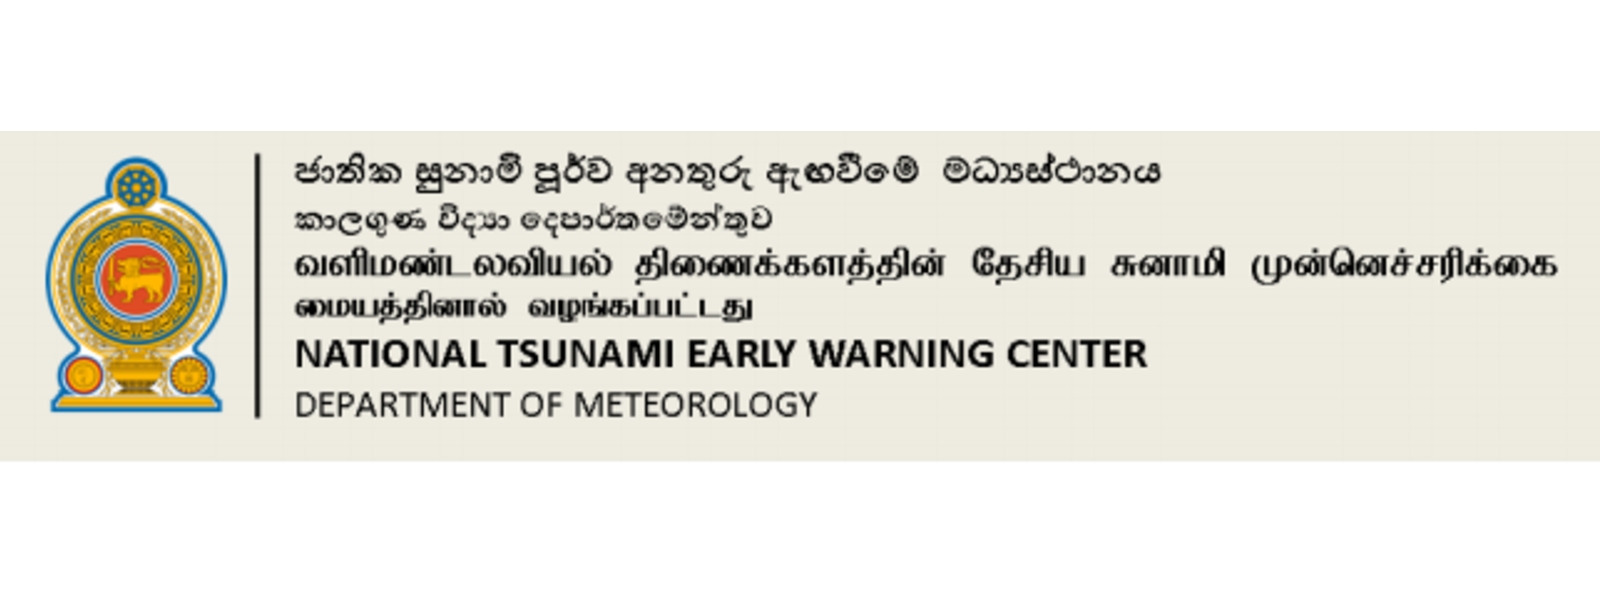 NO Tsunami threat to Sri Lanka following an earthquake in Southern Sumatra Sea: Met. Department